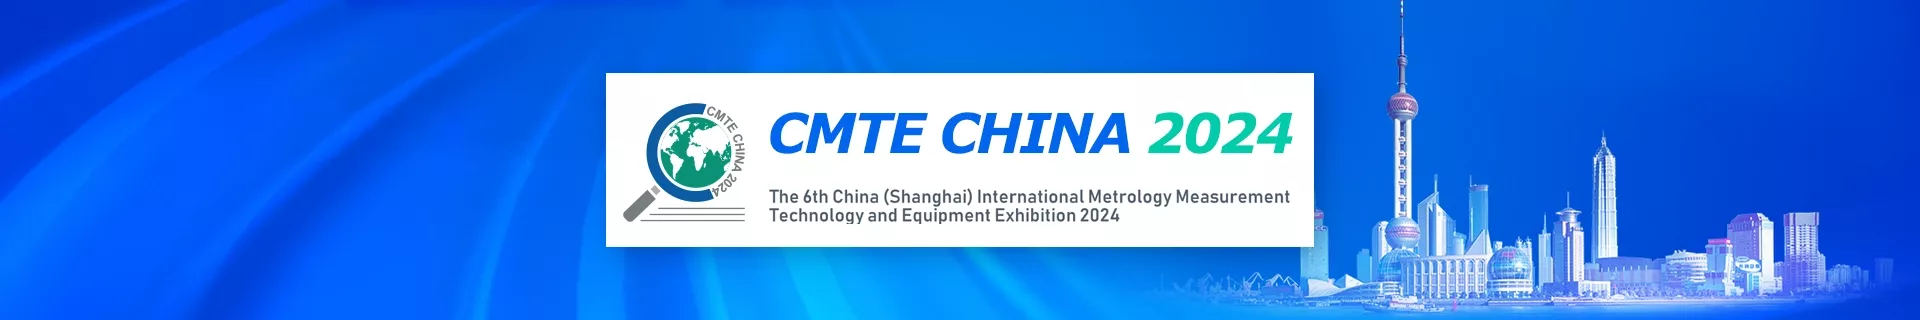 Header image CMTE 2024 6th China Shanghai International Metrology Exhibition